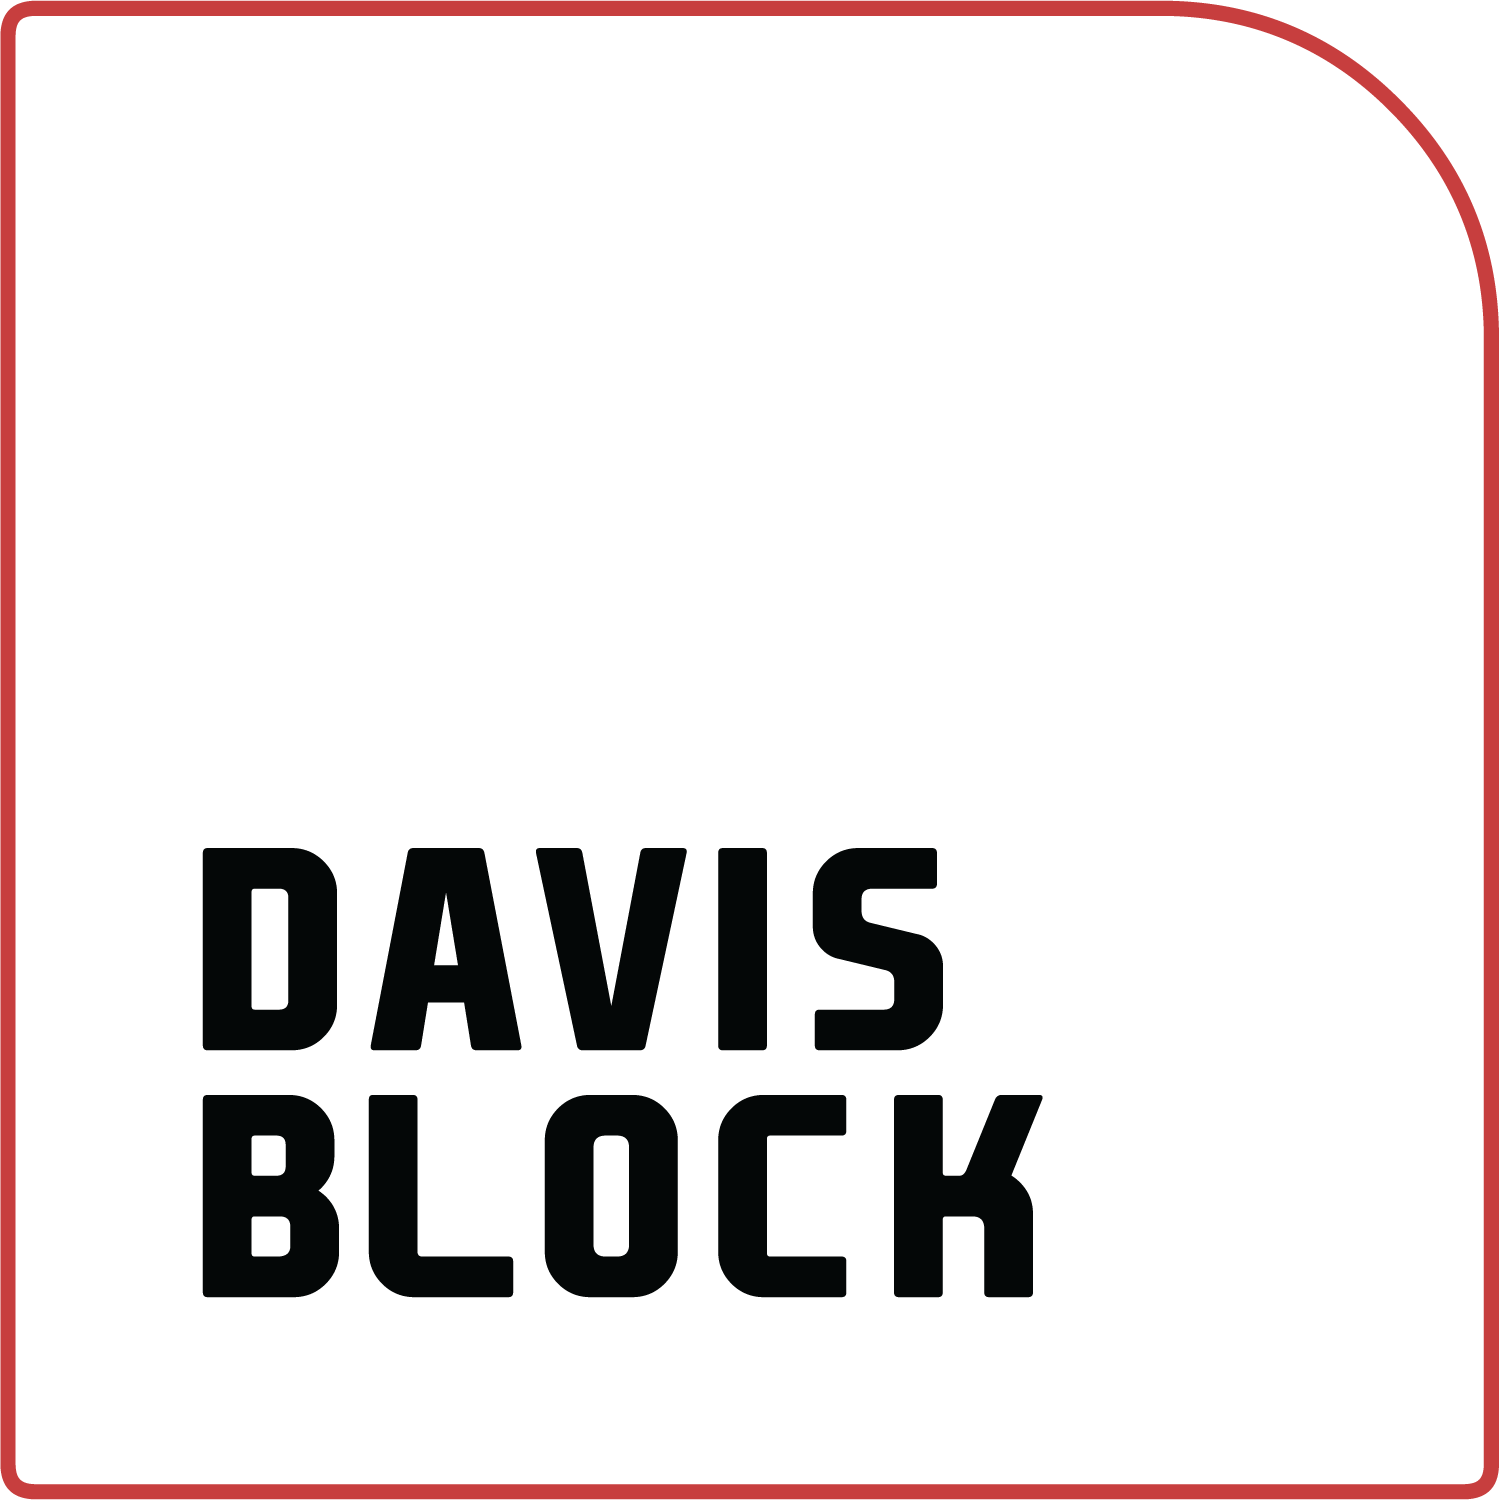 www.davisblock.ca